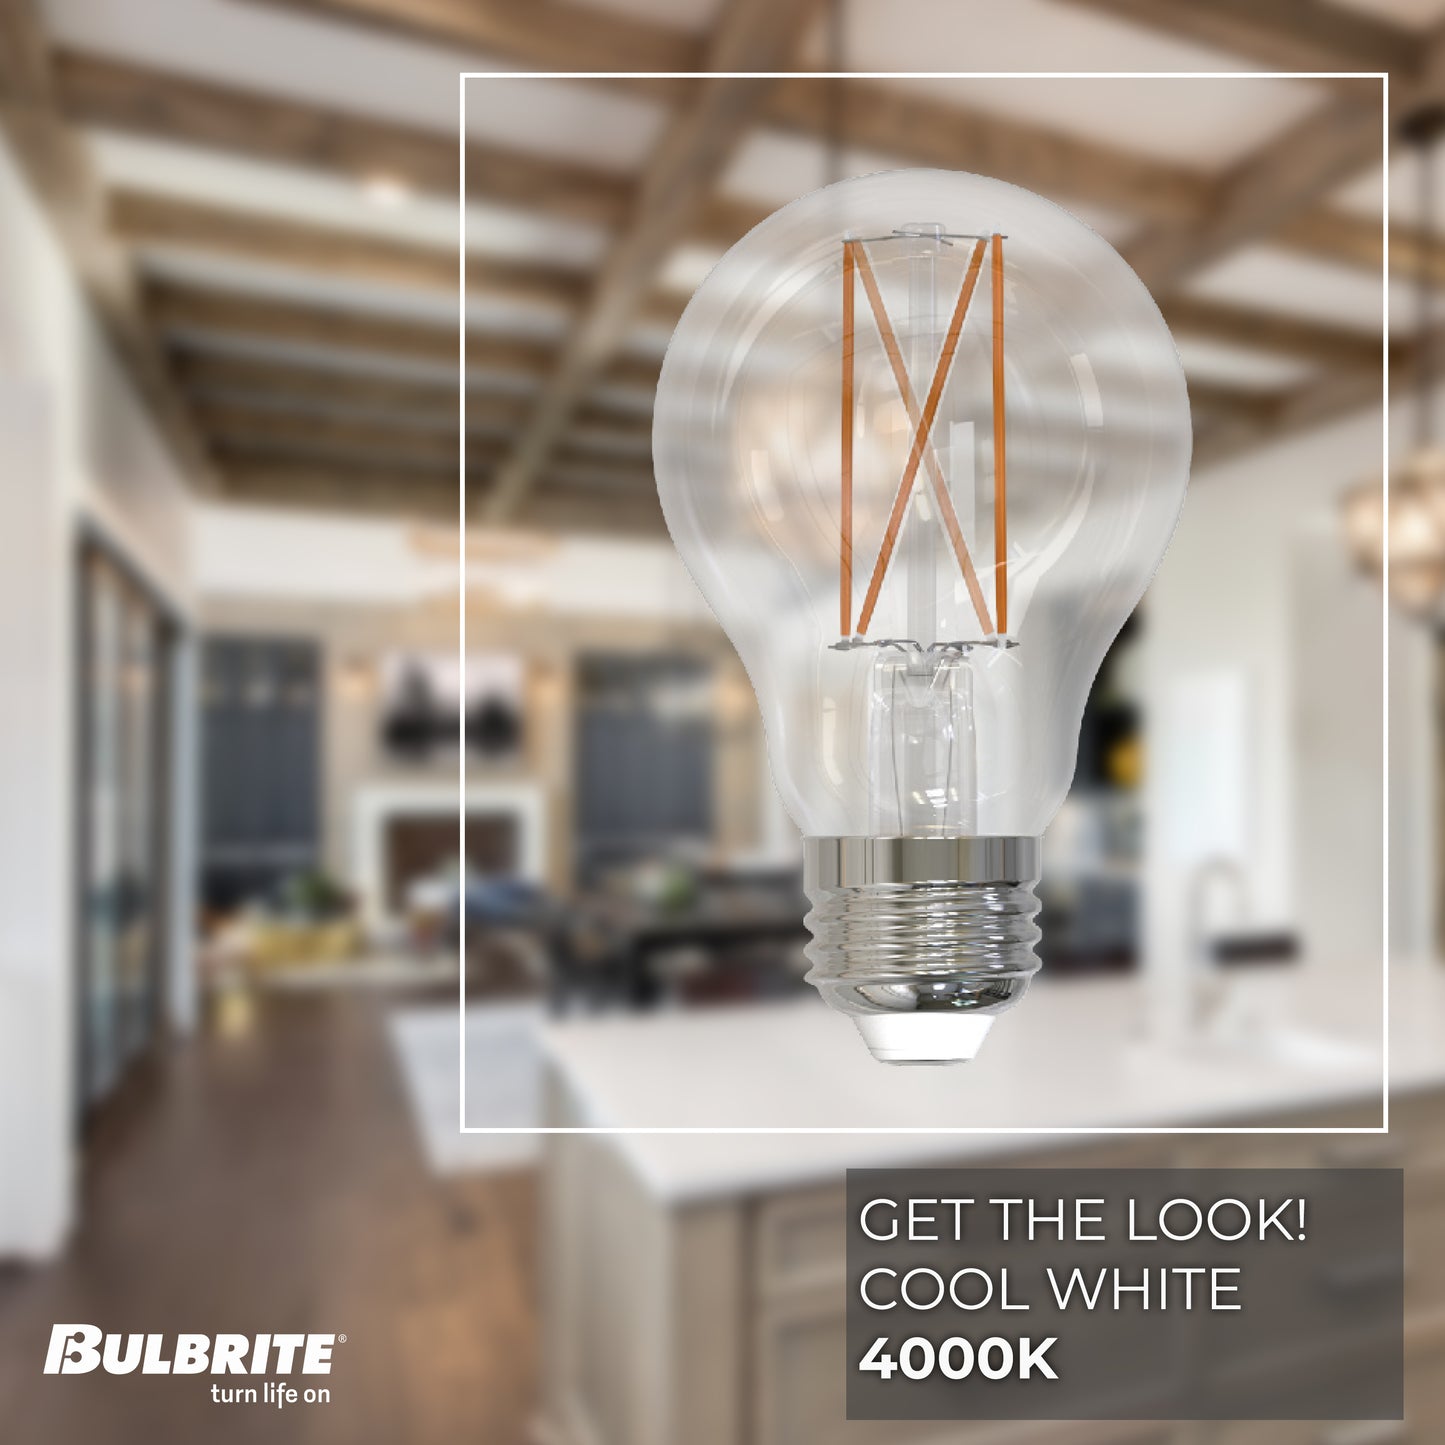 Bulbrite 9W LED A19 LIGHT BULB 4000K COOL WHITE FILAMENT, E26 MEDIUM SCREW BASE, DIMMABLE, 4PK